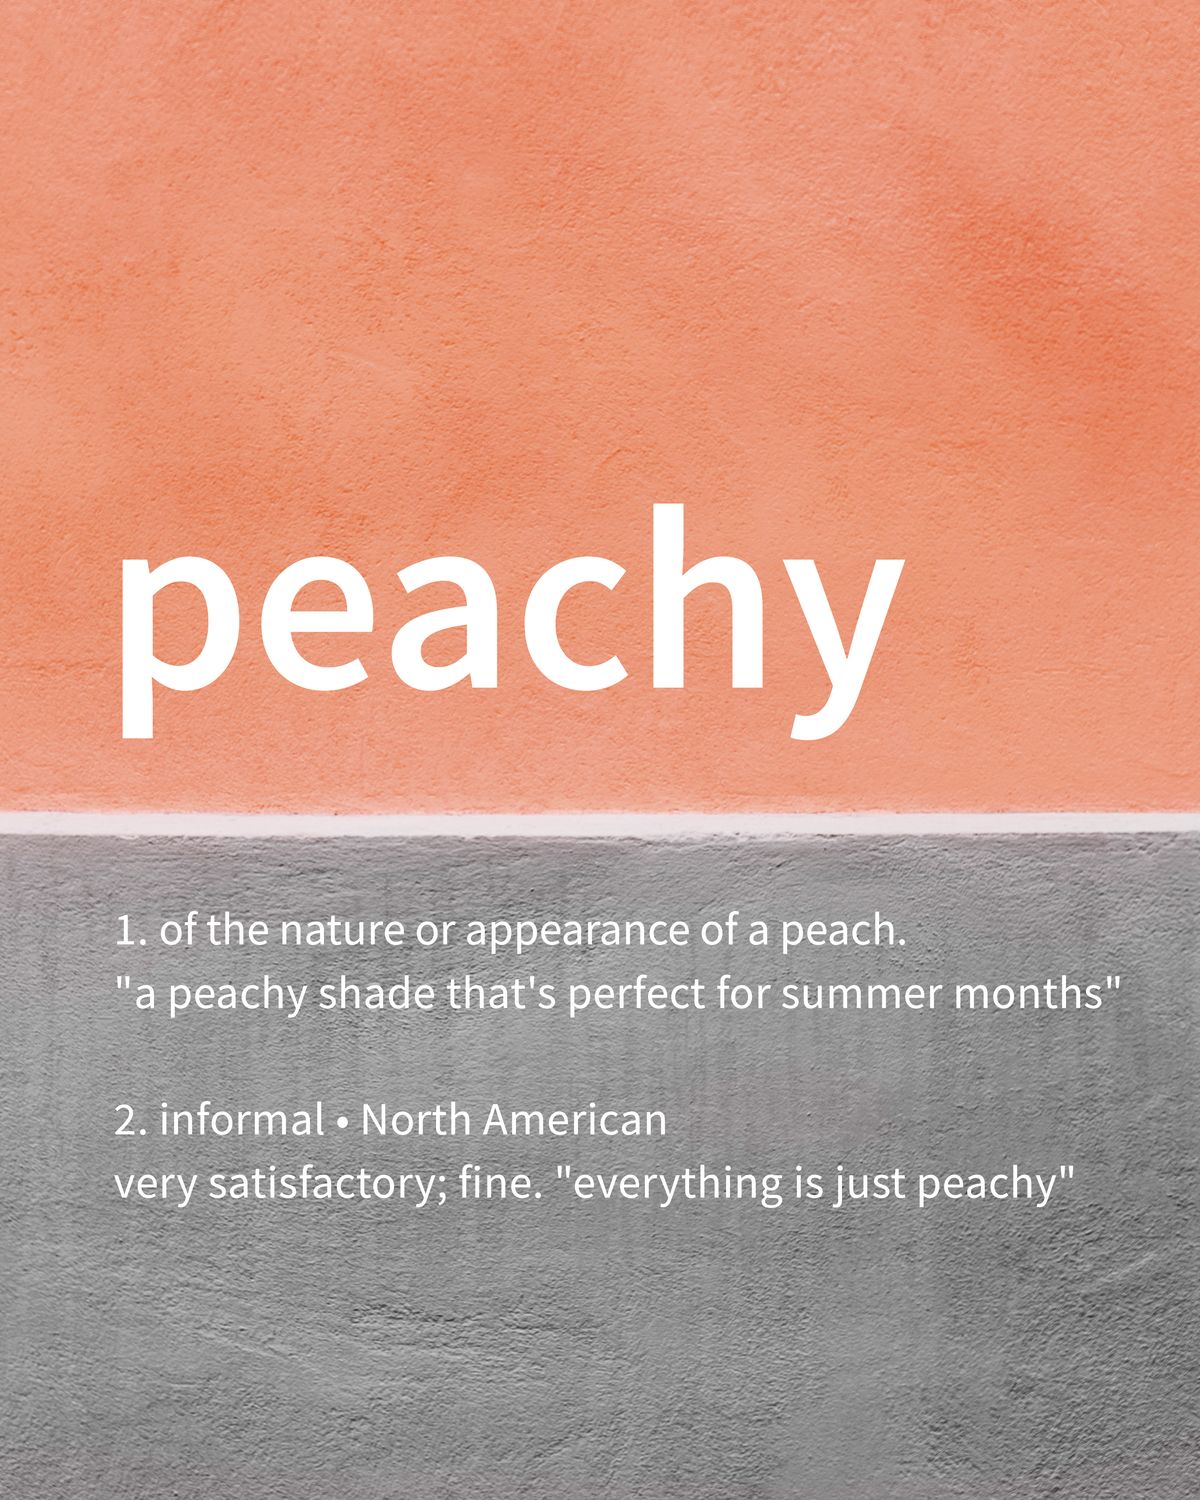 Peachy Definition